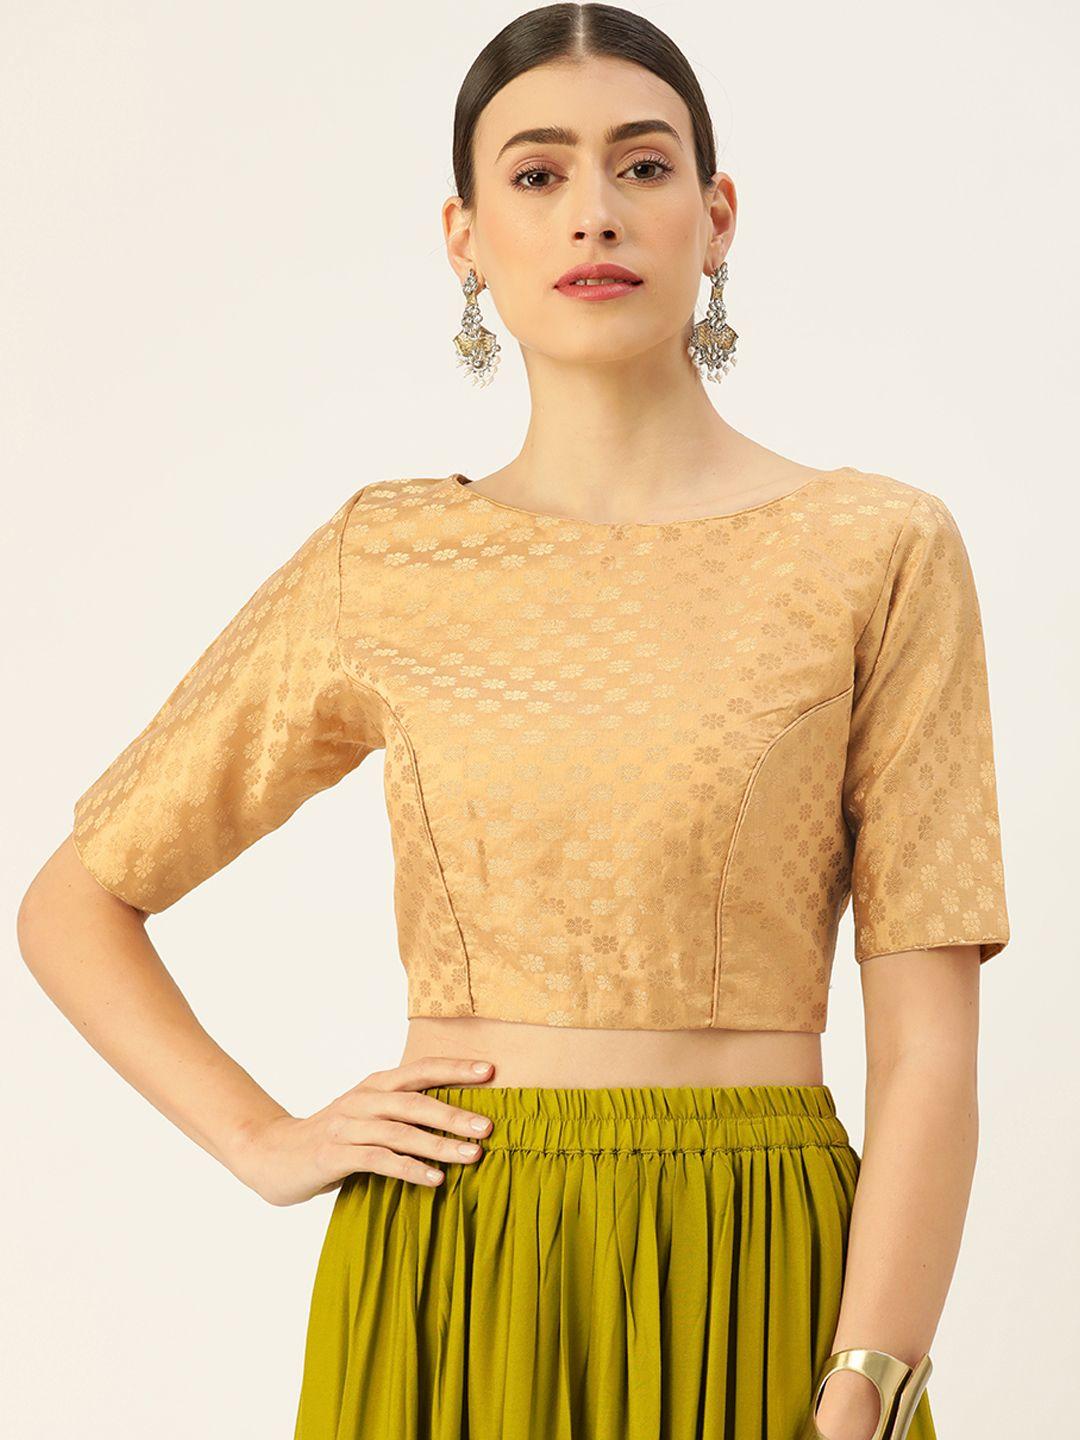 tantkatha gold toned jacquard woven design saree blouse